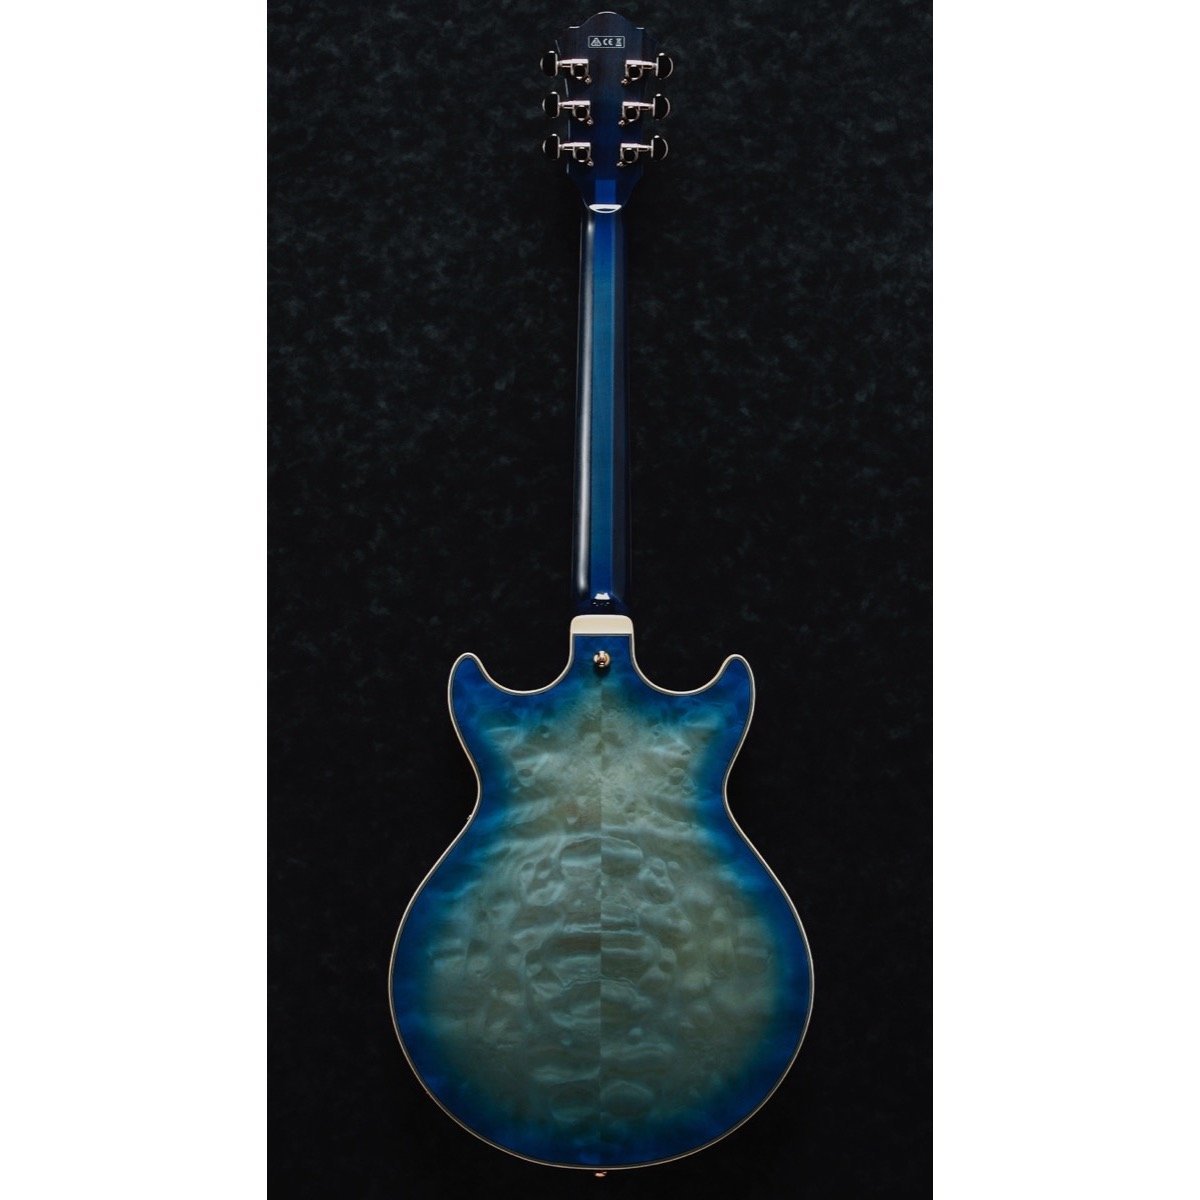 Ibanez Artcore Expressionist AM93QM Semi-Hollowbody Electric Guitar, Jet Blue Burst